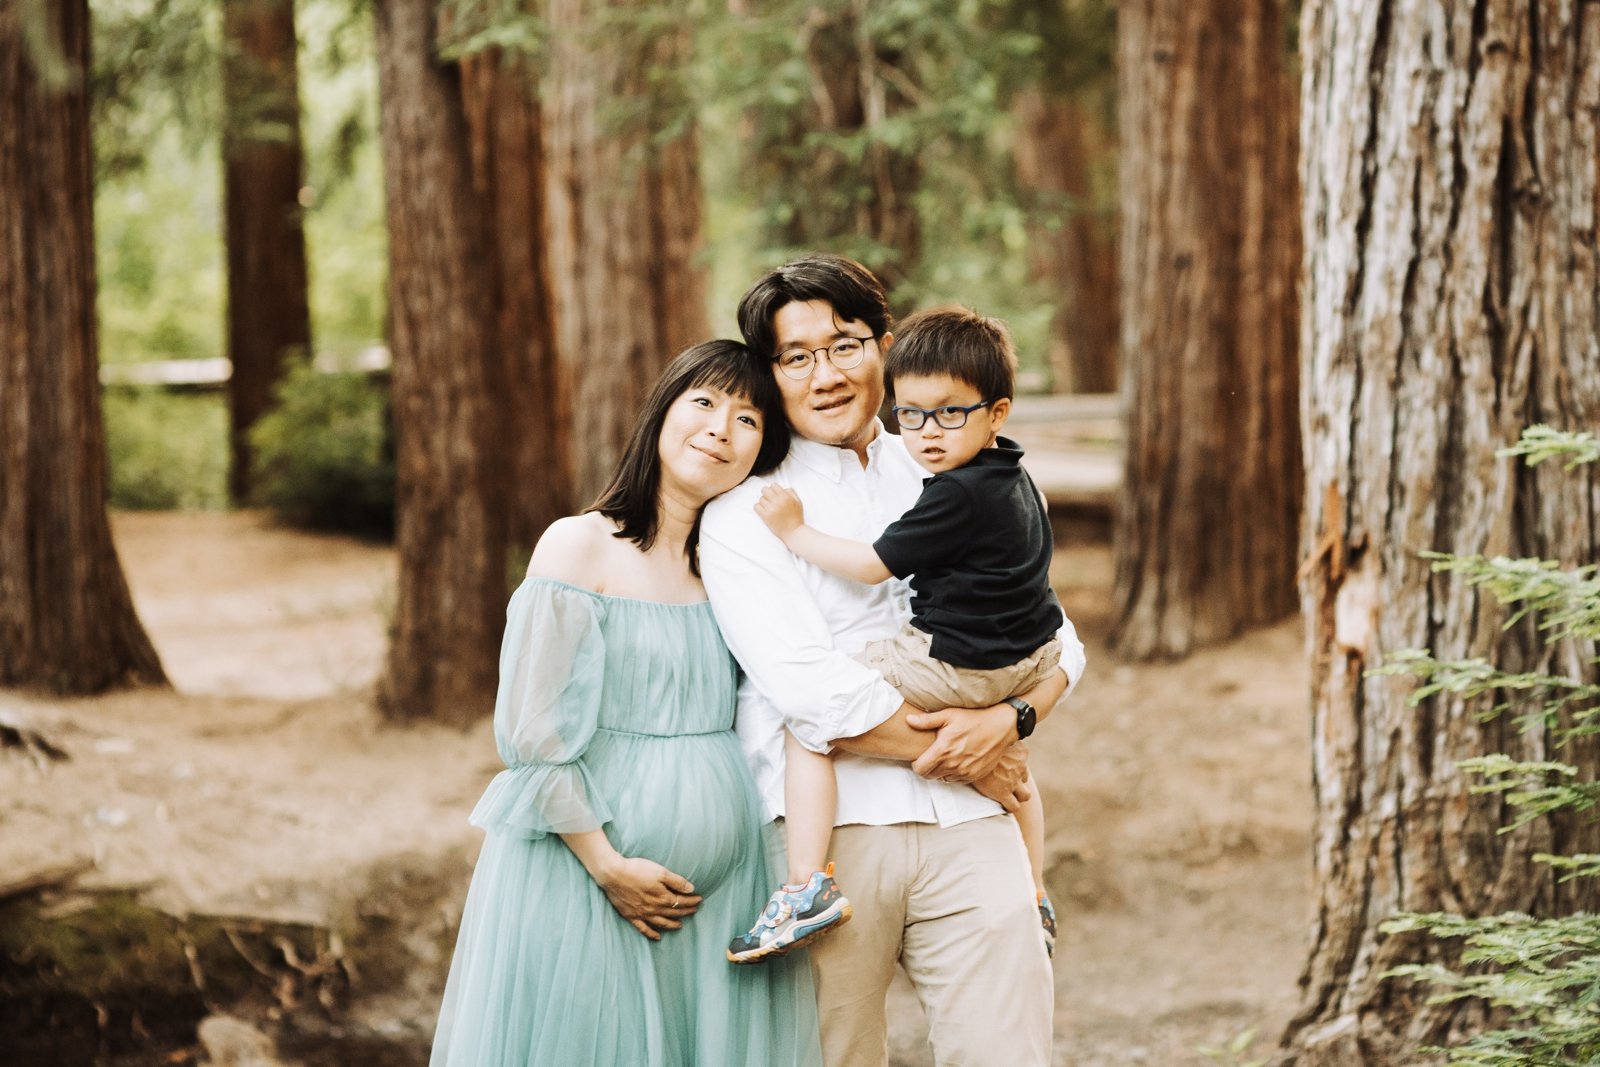 south bay family photographer san jose maternity photography los altos redwoods photoshoot 32.jpg